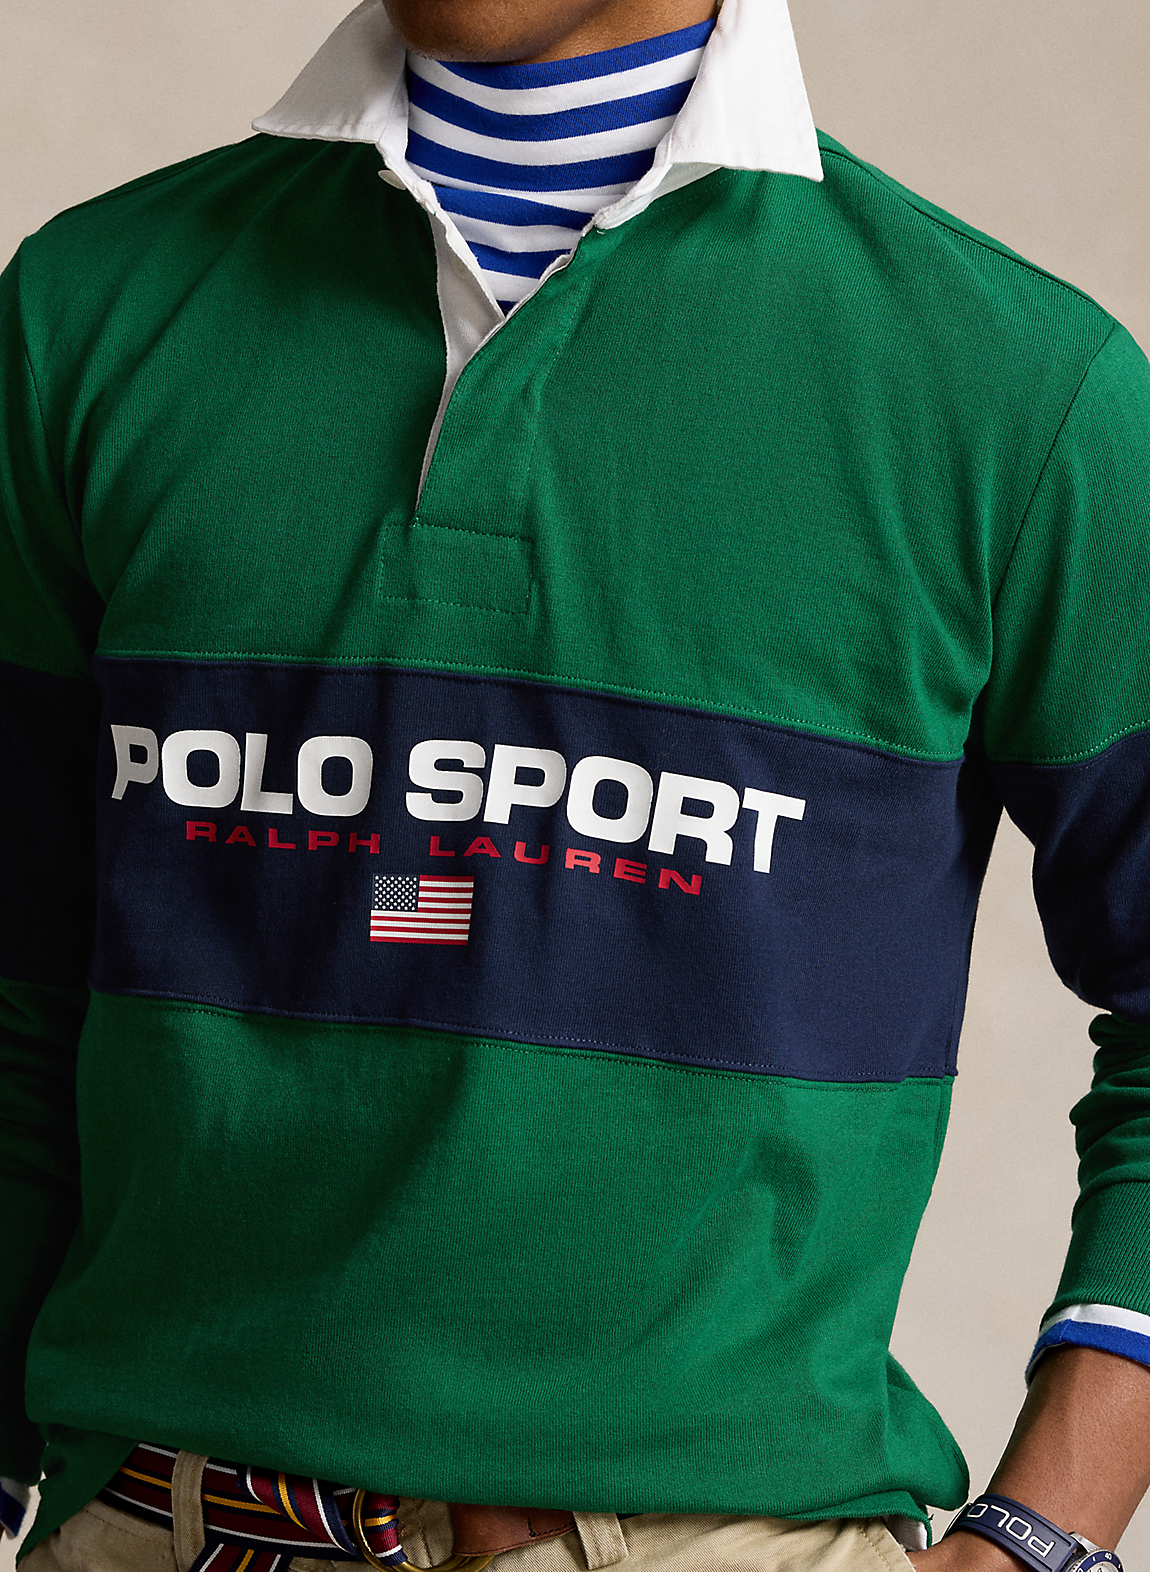 Polo Sport クラシック フィット ラグビー シャツ